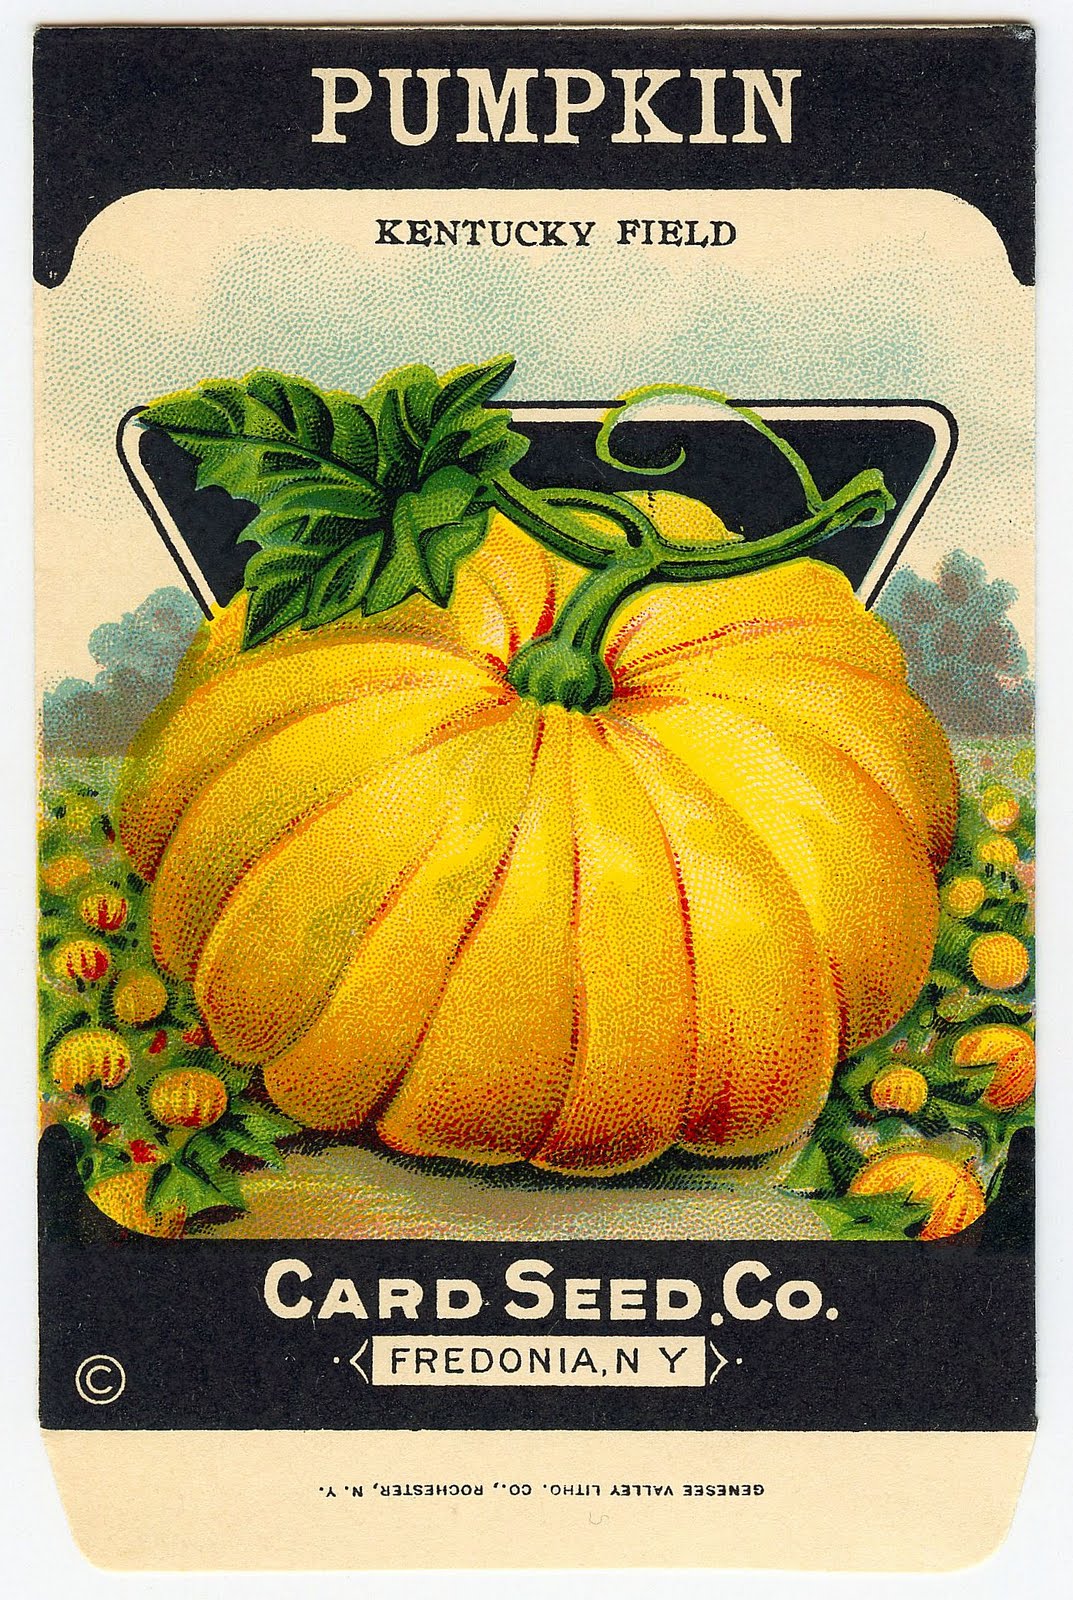 Vintage Halloween Clip Art   Adorable Pumpkin Seed Packet   The    